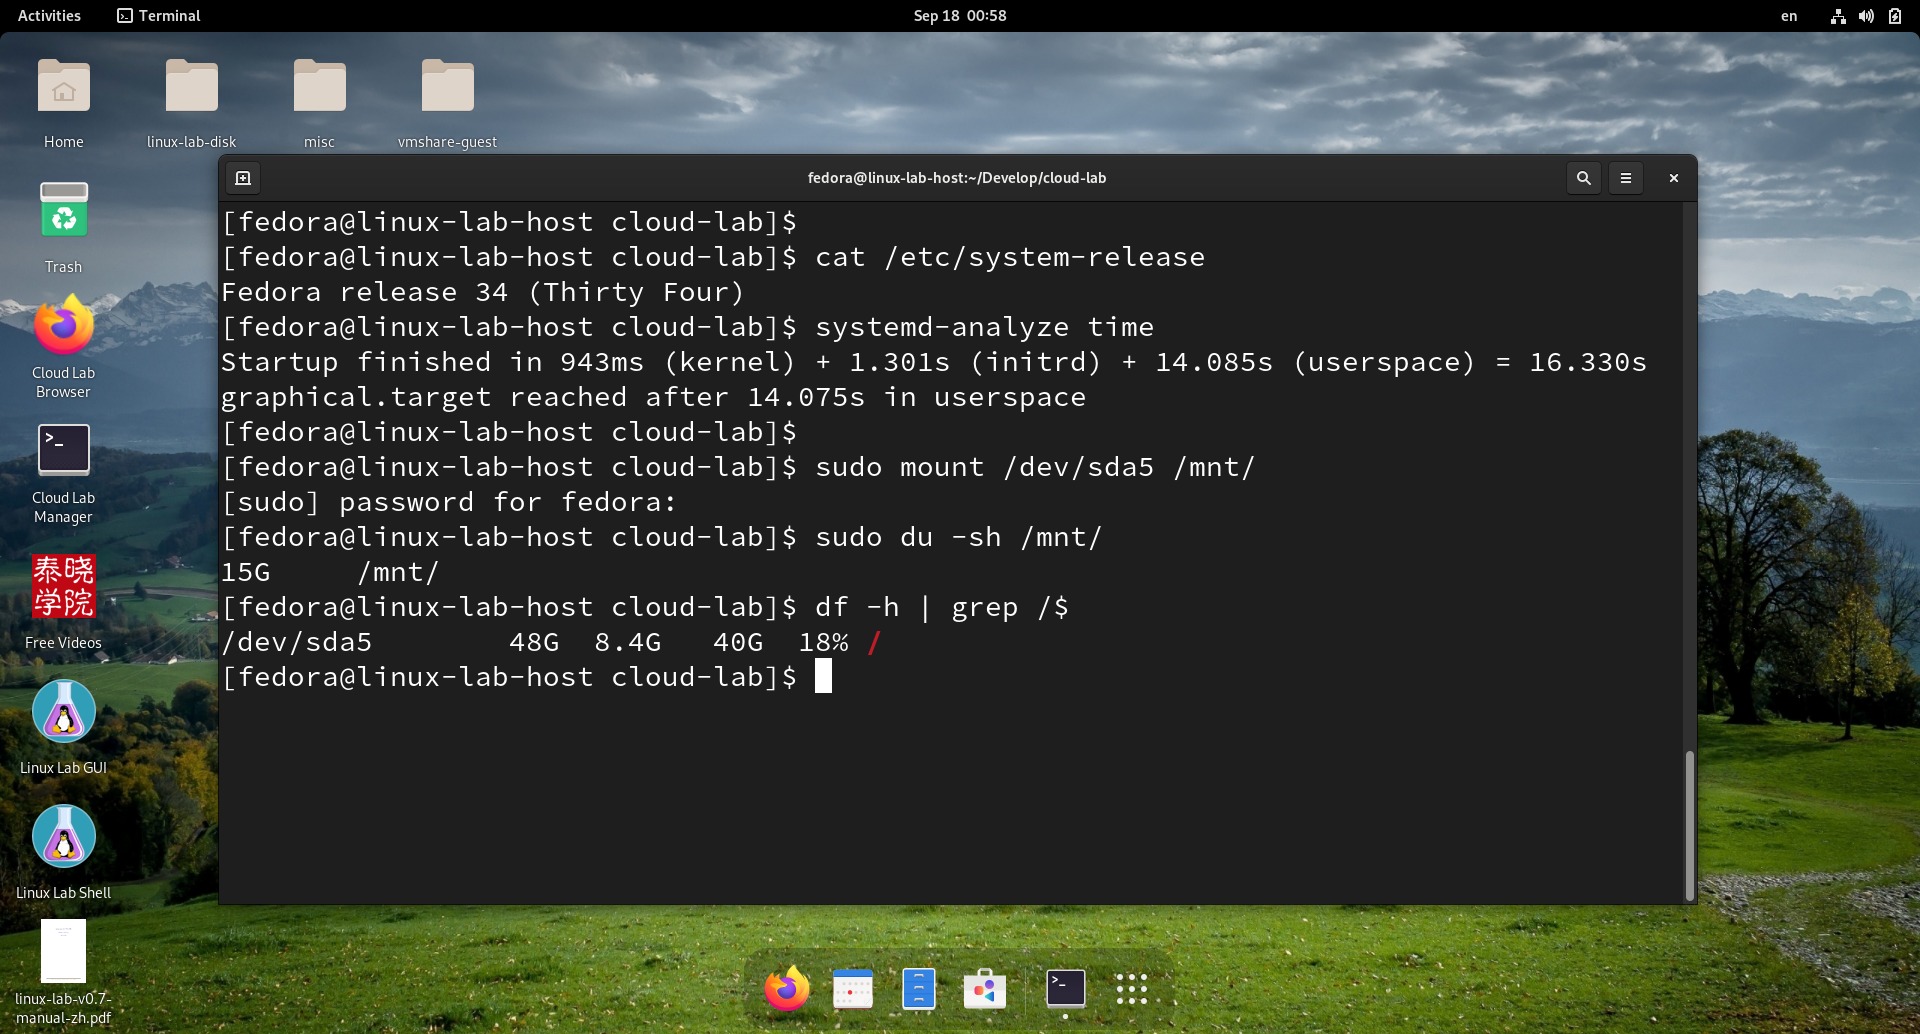 Linux Lab Disk 透明倍容效果图